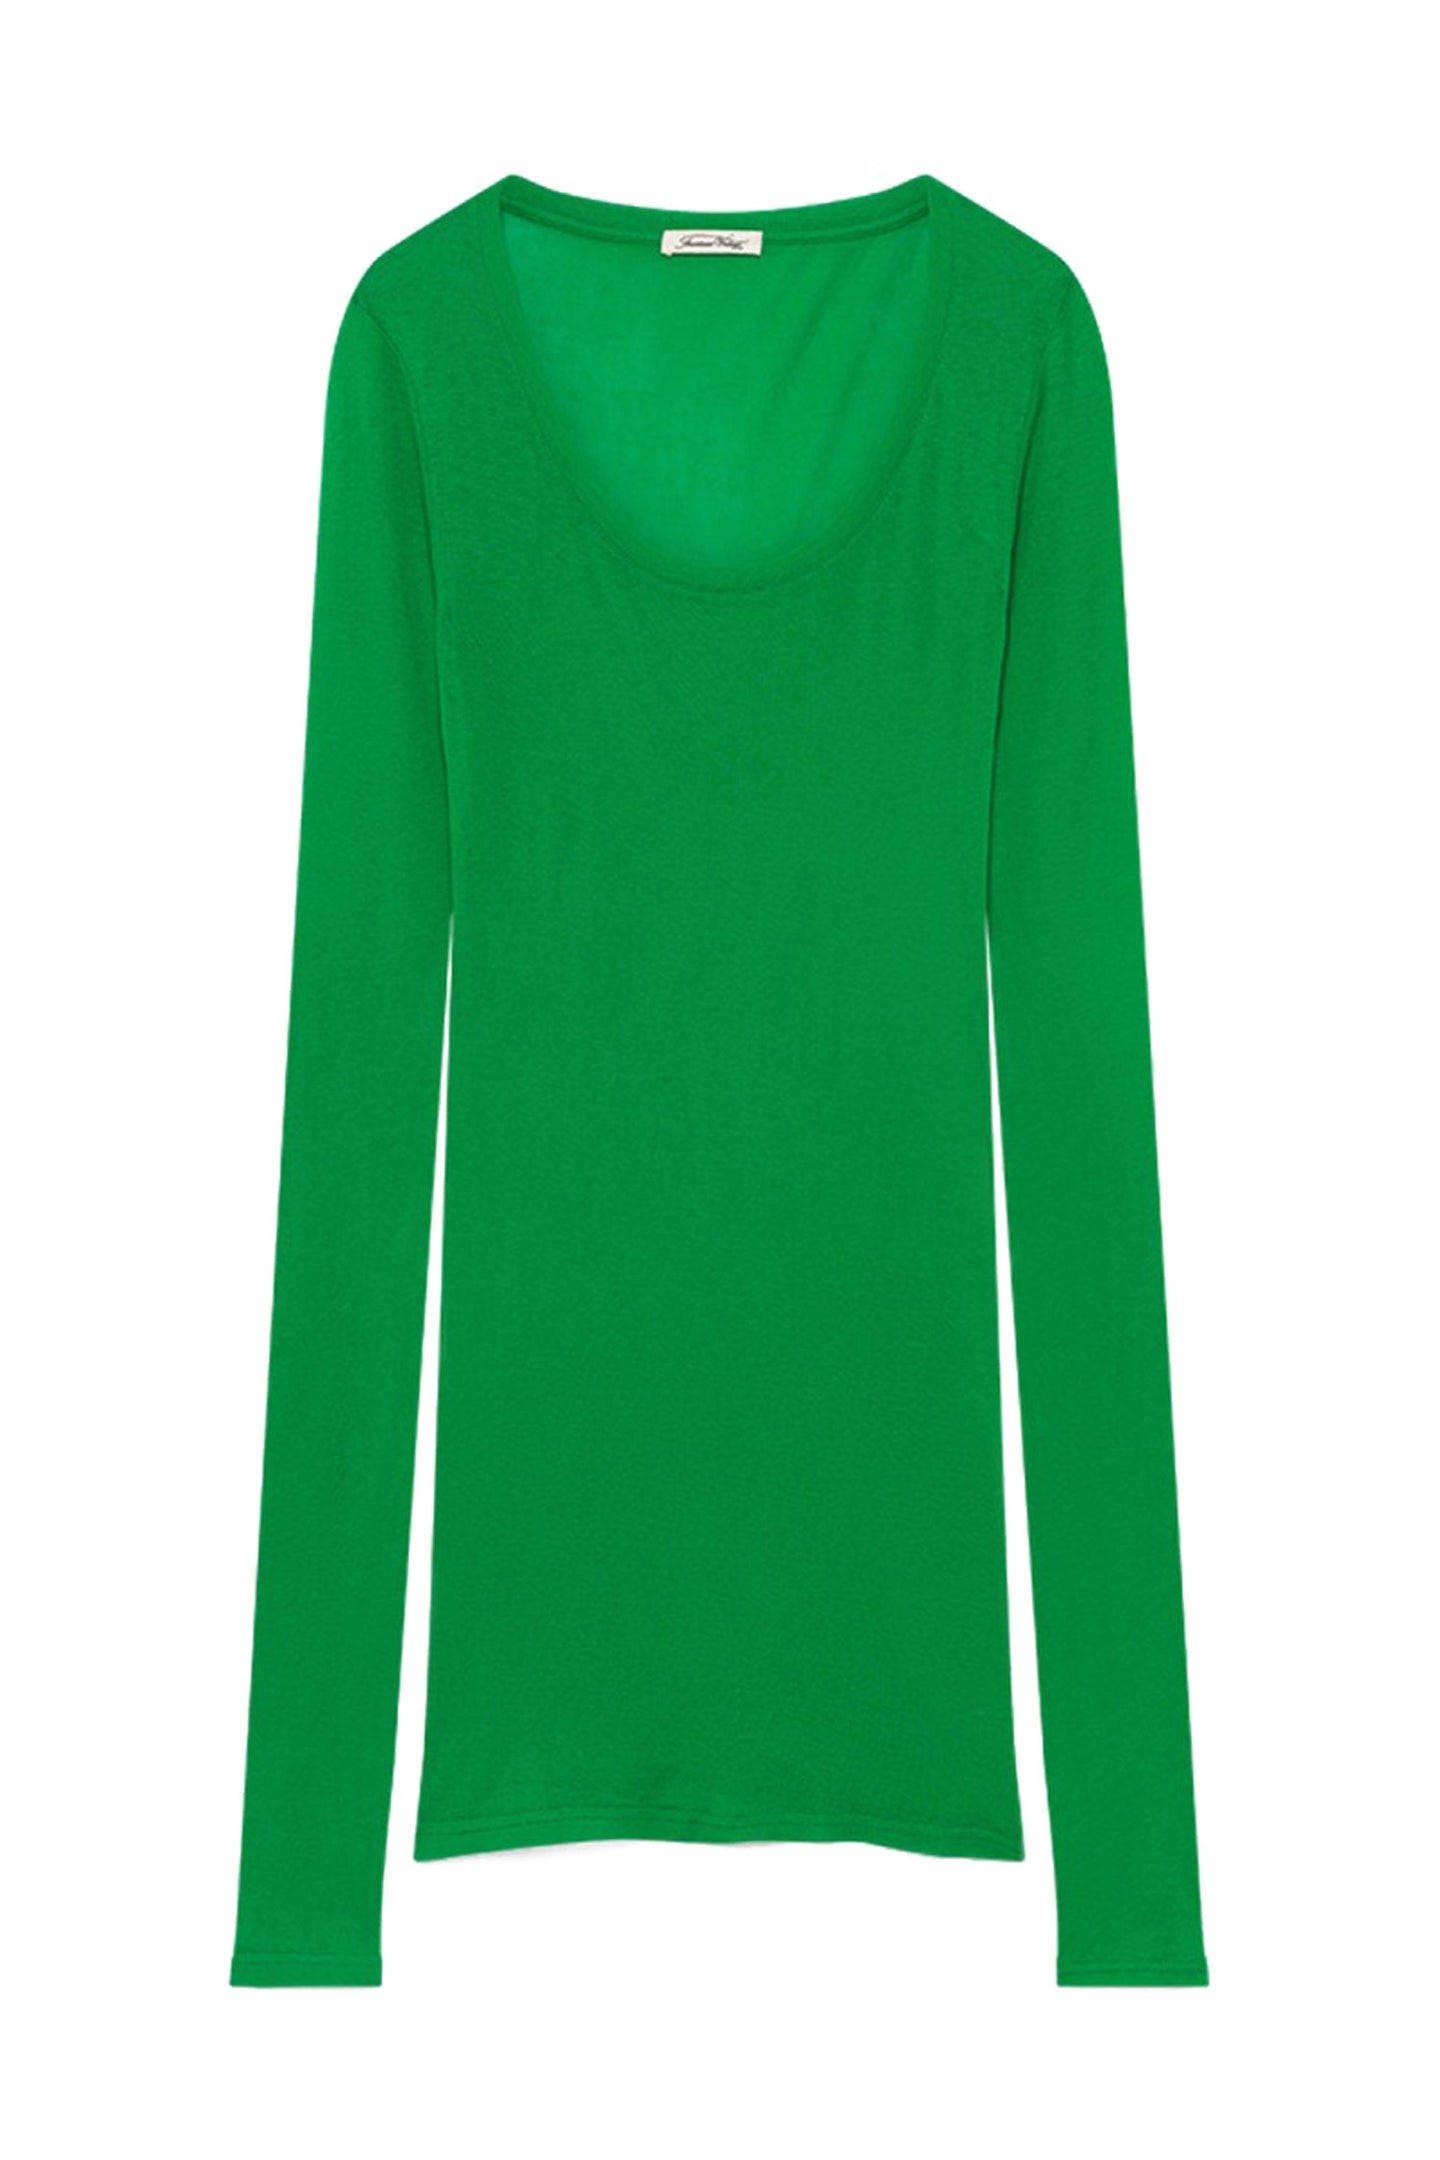 'Massachusetts' Supima Cotton Long-Sleeved T-shirt Frog - RUE MADAME | BOUTIQUE PARISIENNE